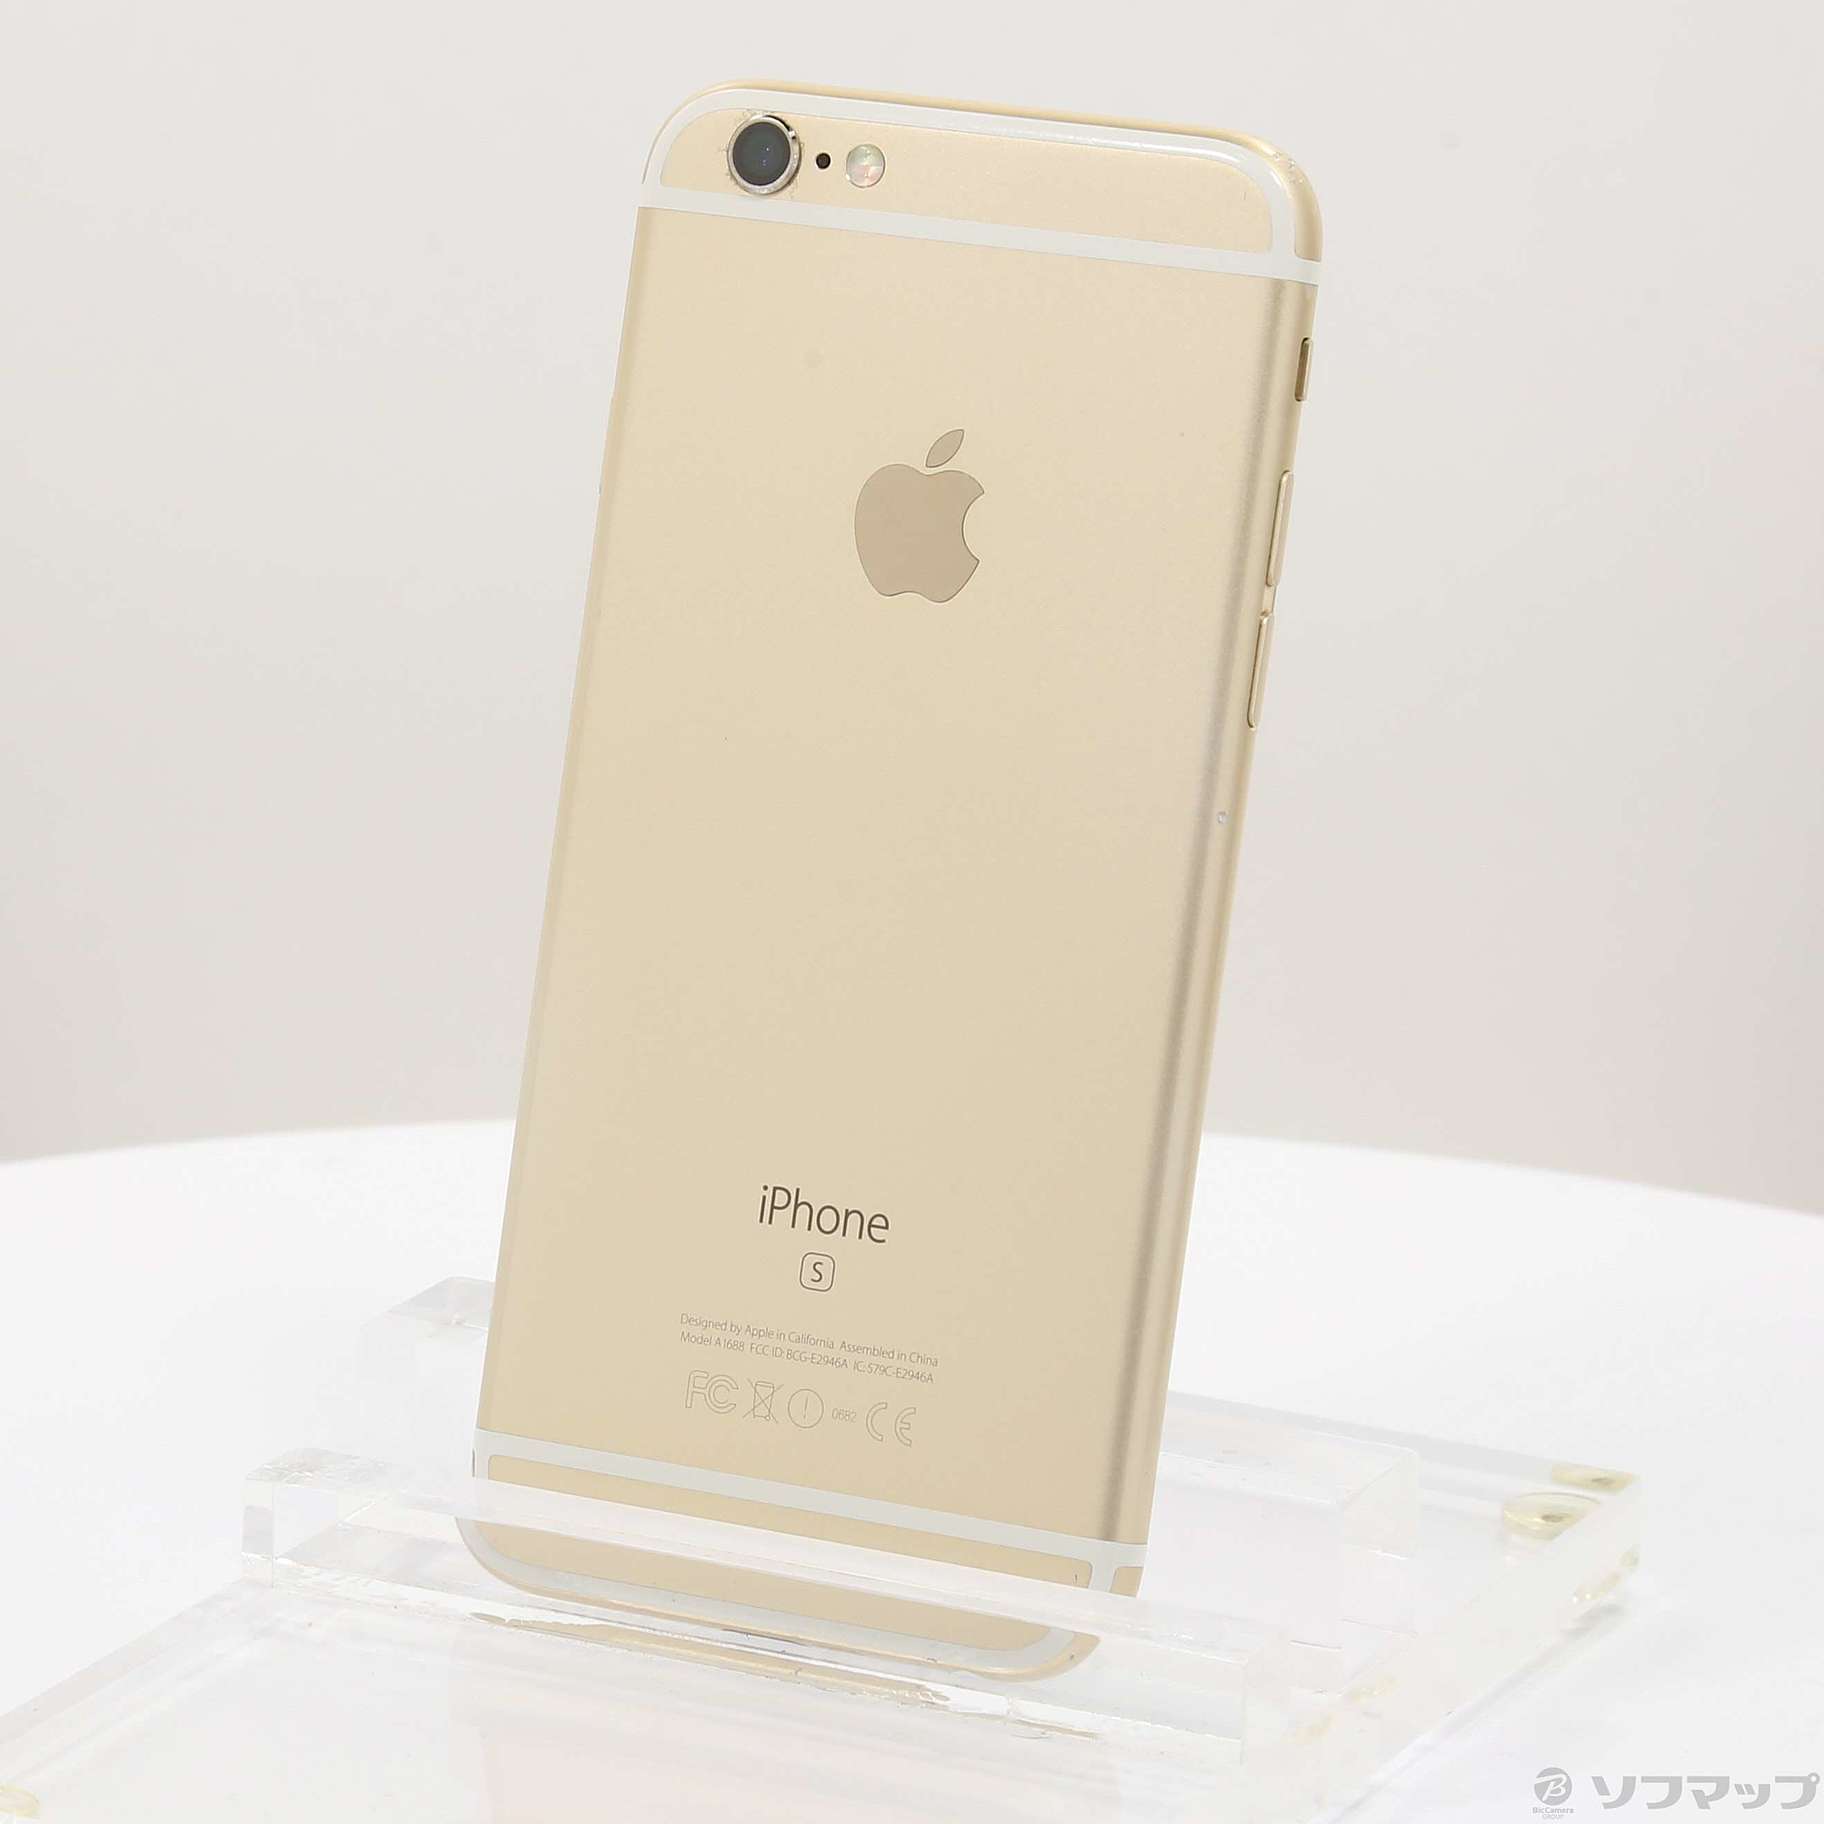 【新品未開封】iPhone 6s - Gold 32GB - SIMフリー